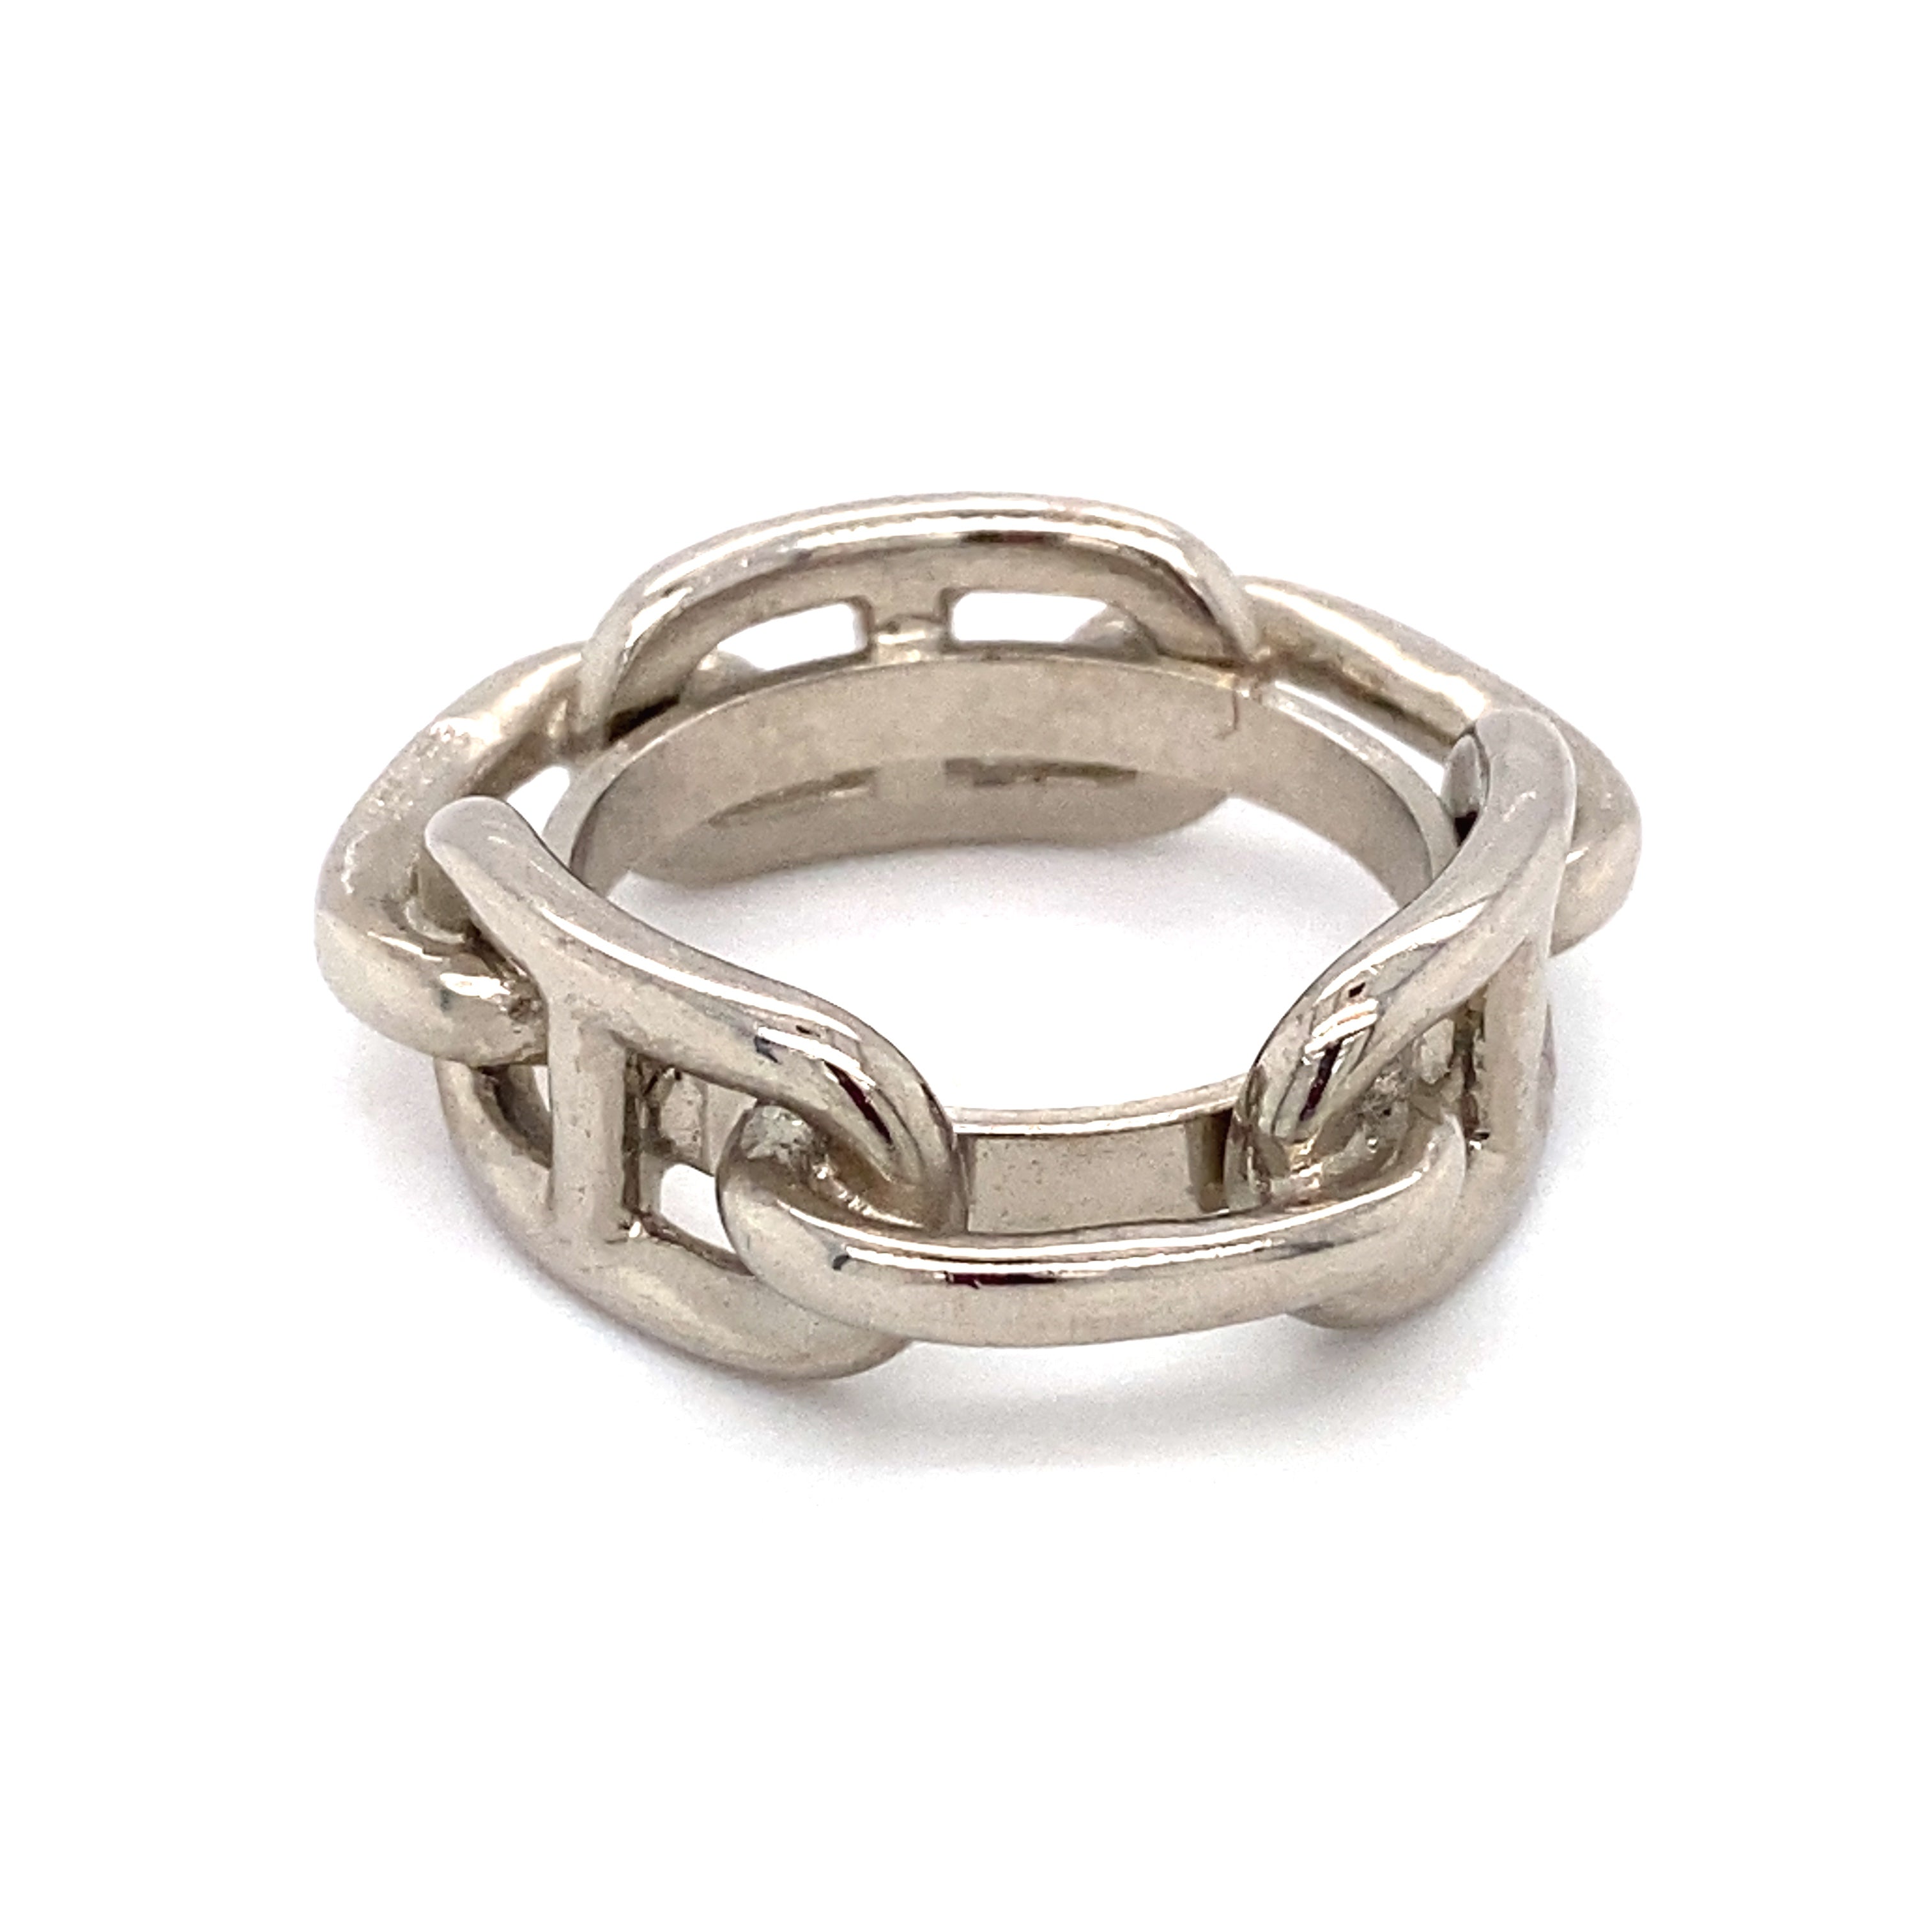 Vintage Hermès Silver Tone Horsebit Scarf Ring - The Verma Group